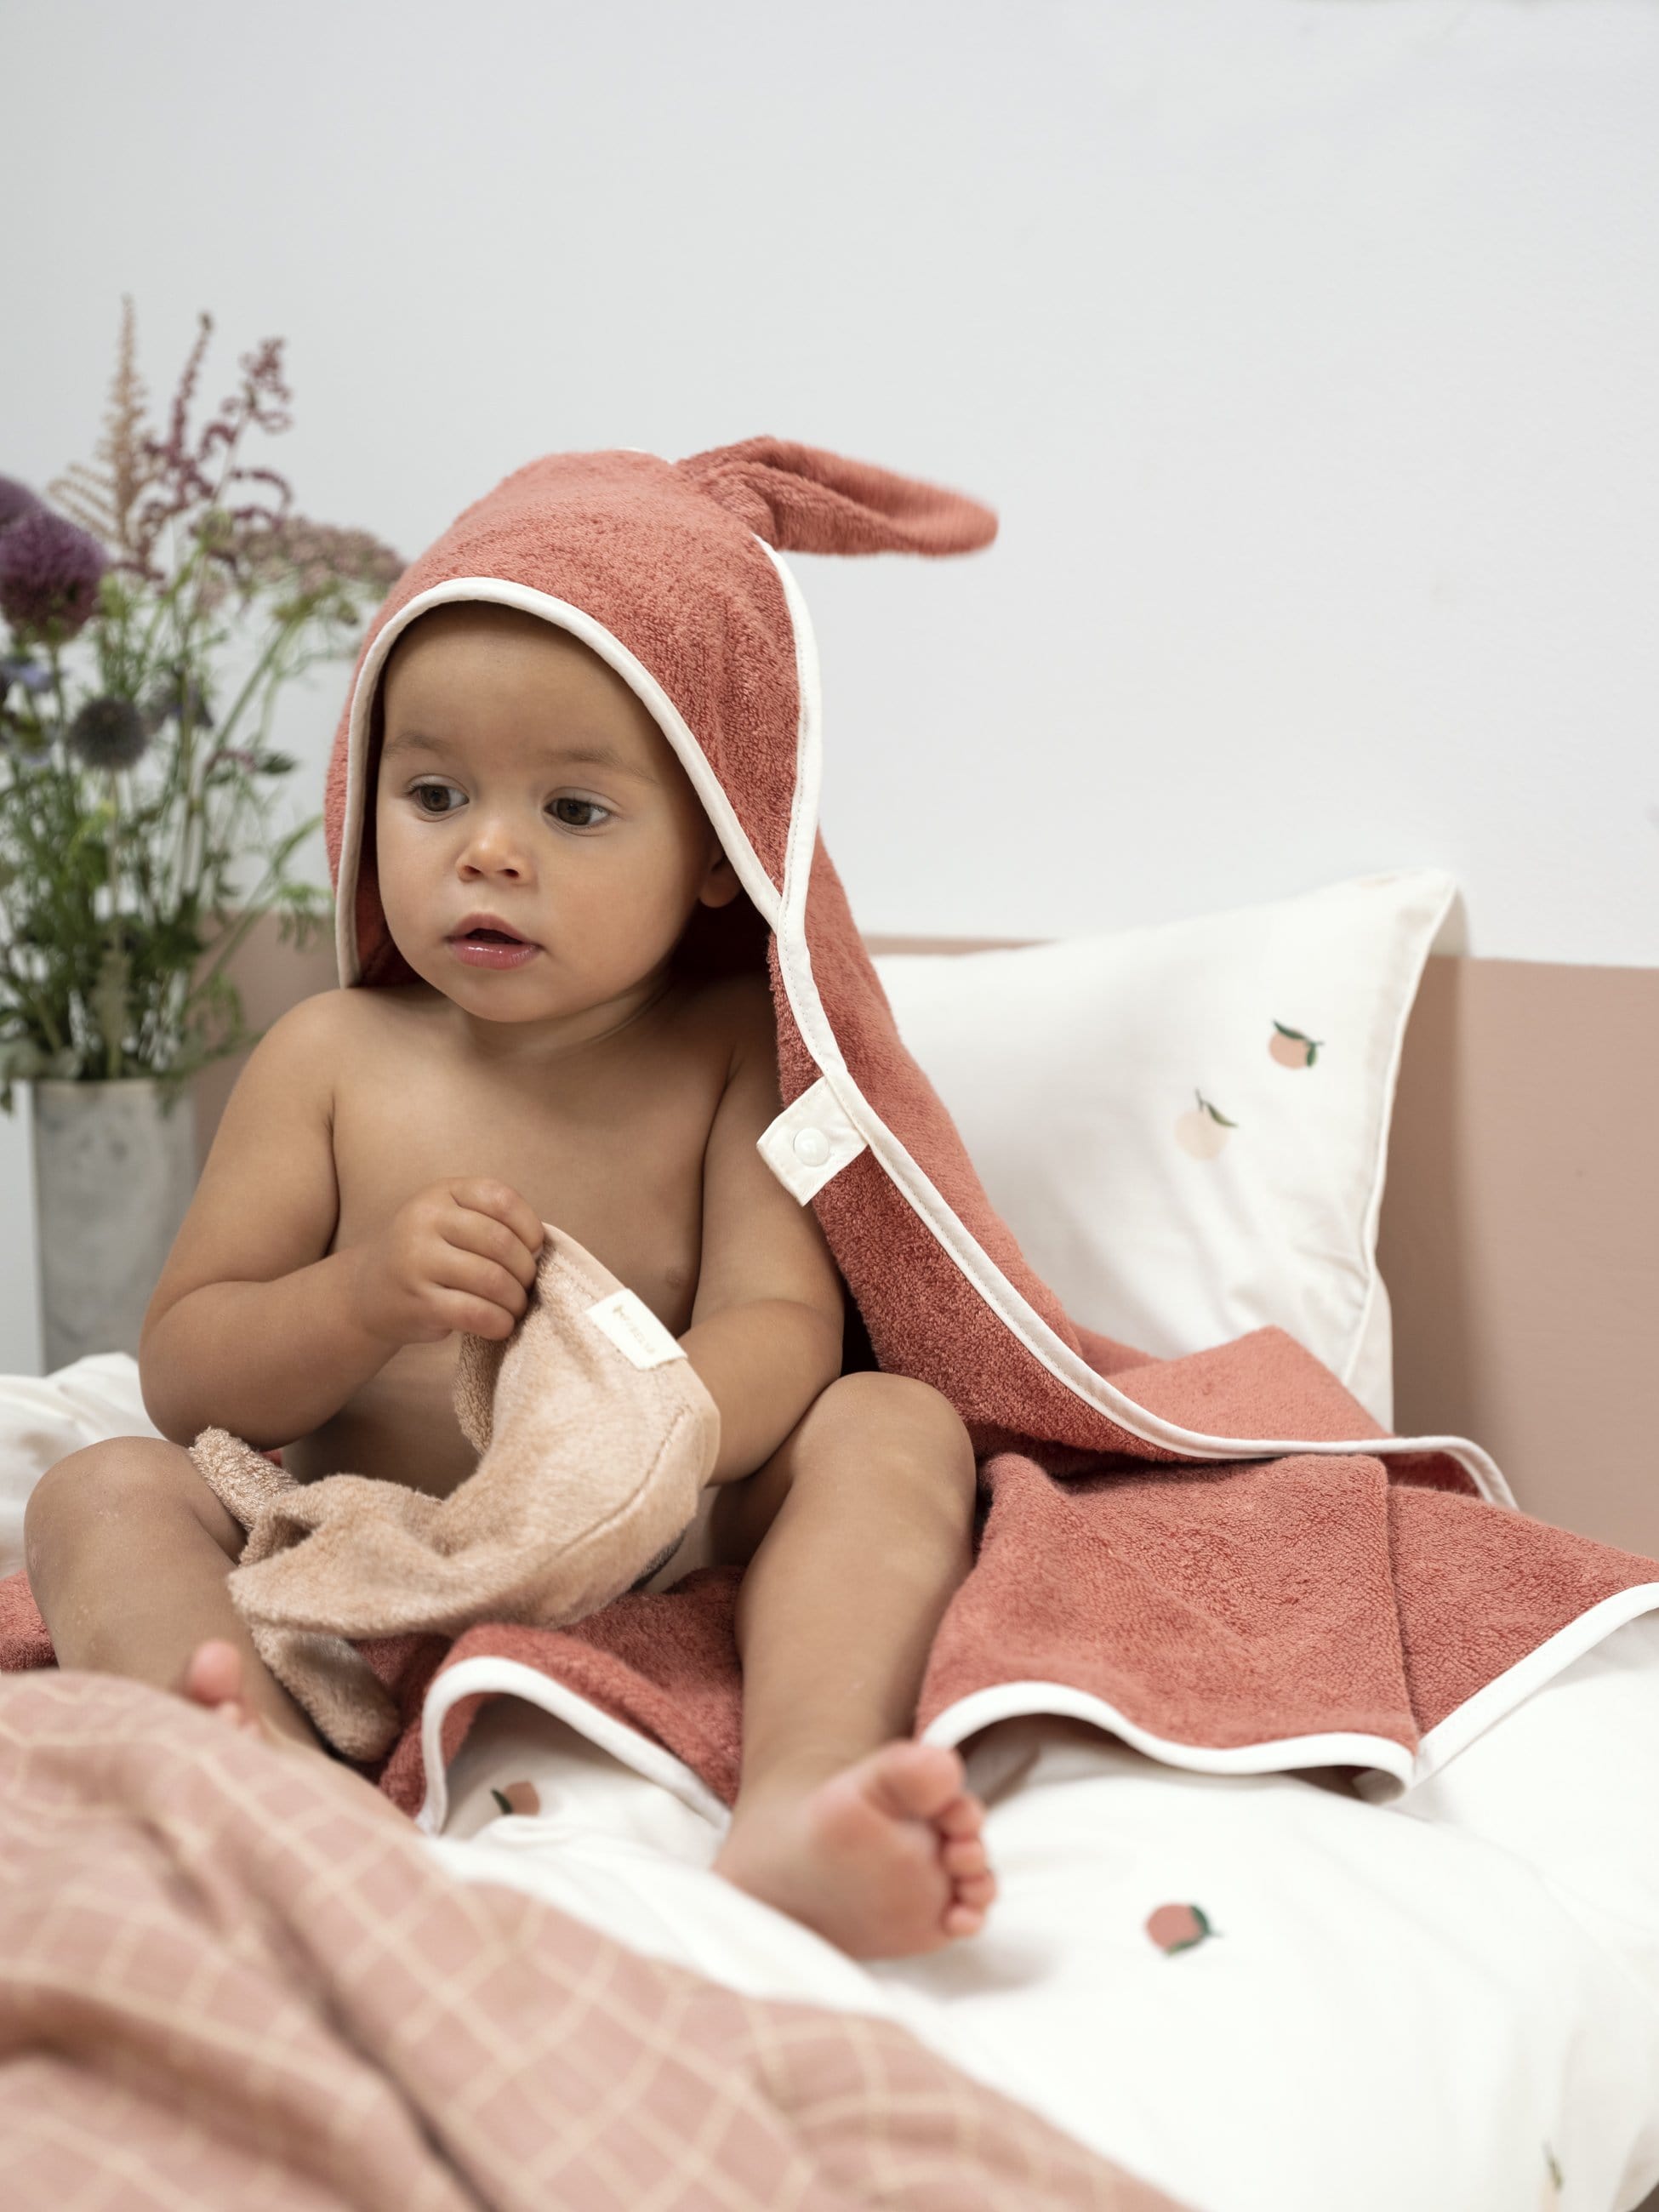 Hooded Baby Towel - Bunny